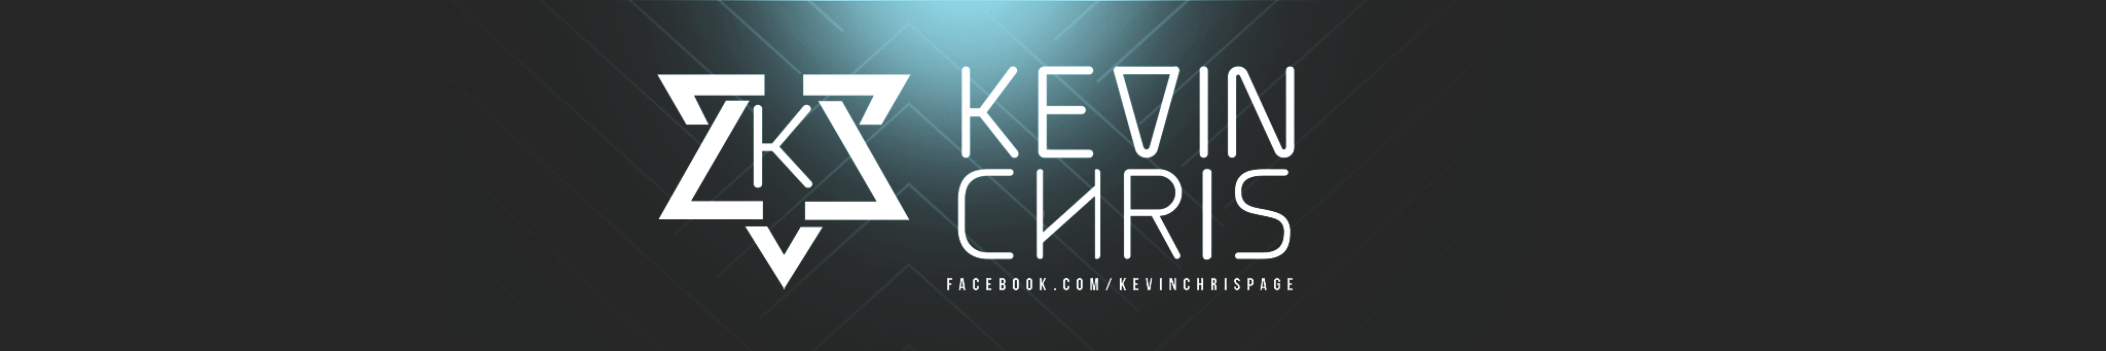 Kevin Chris 777